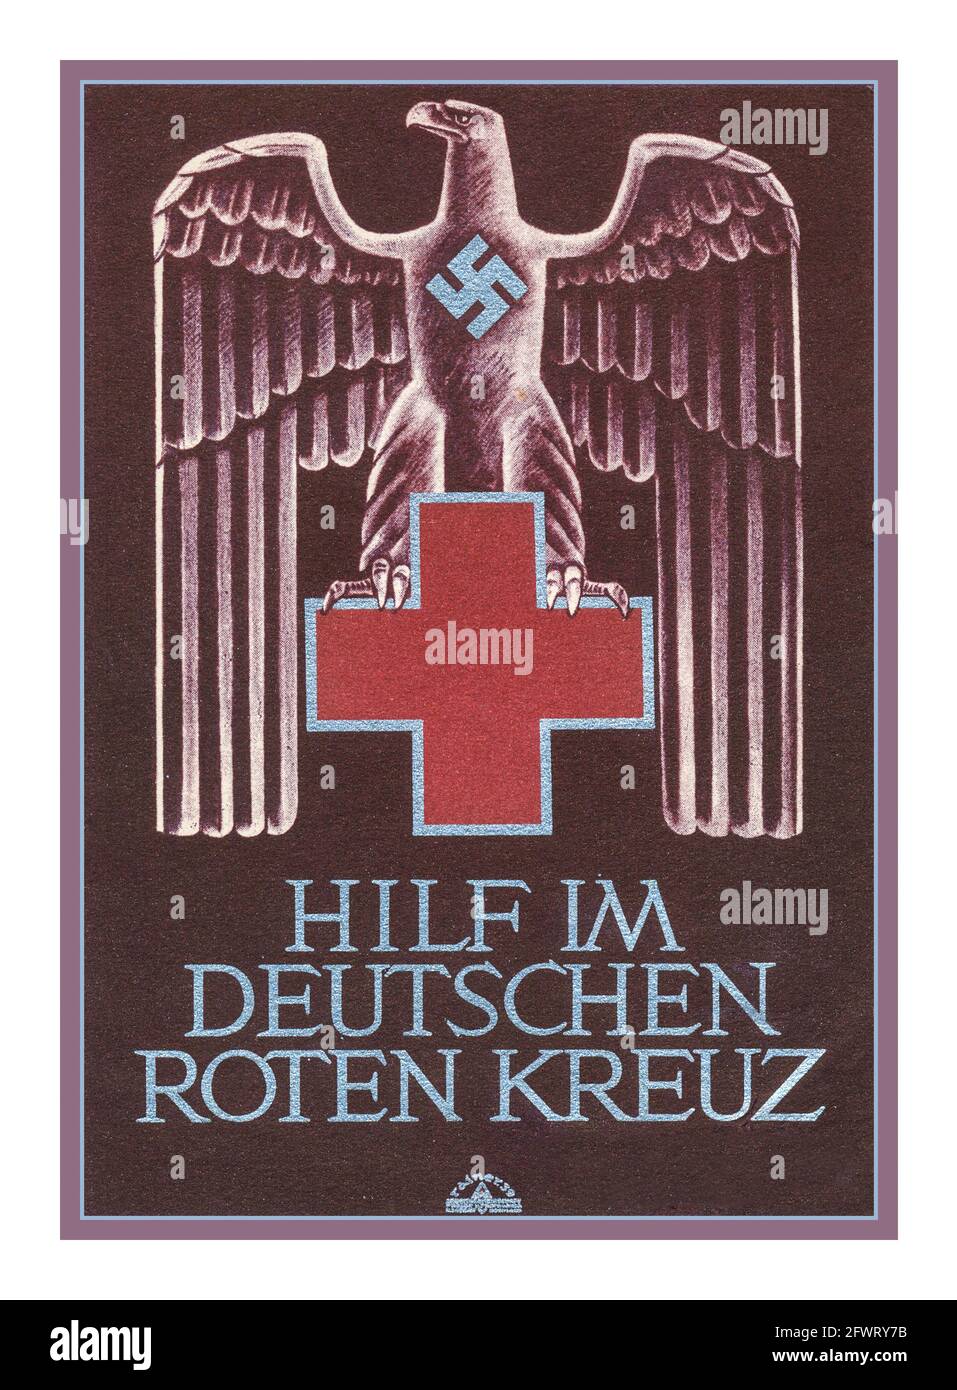 1930's Nazi Red Cross Propaganda Poster Card WW2 Second World War “Help in the German Red Cross” 'hilf im deutschen roten kreuz' Illustration of German Eagle with Swastika and Red Cross Stock Photo